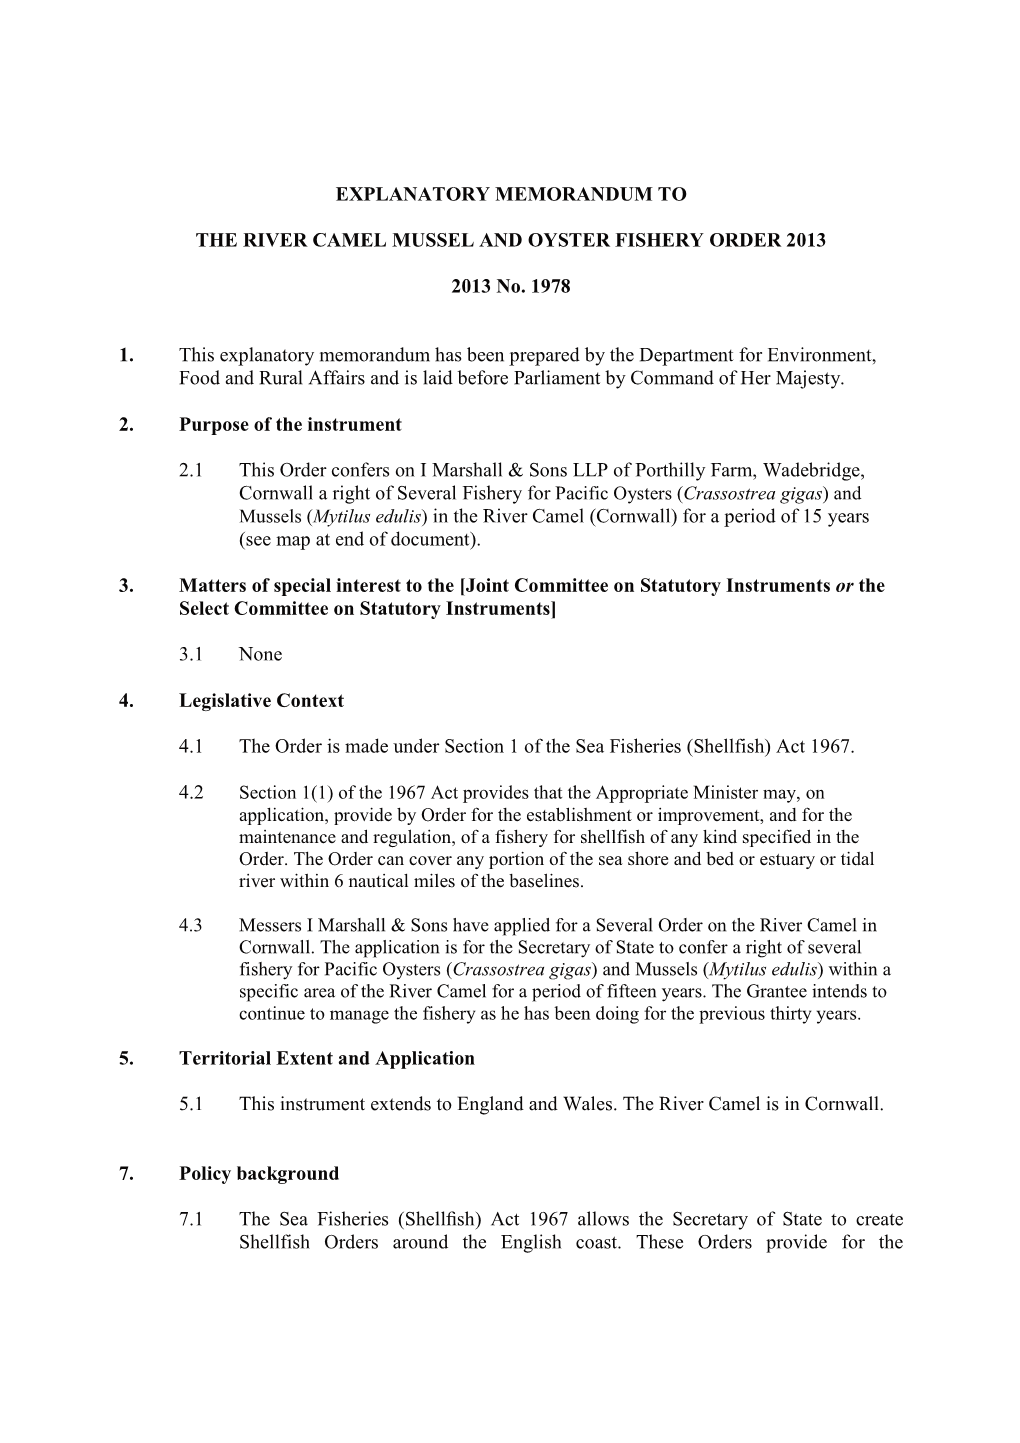 EXPLANATORY MEMORANDUM to the RIVER CAMEL MUSSEL and OYSTER FISHERY ORDER 2013 2013 No. 1978 1. This Explanatory Memorandum